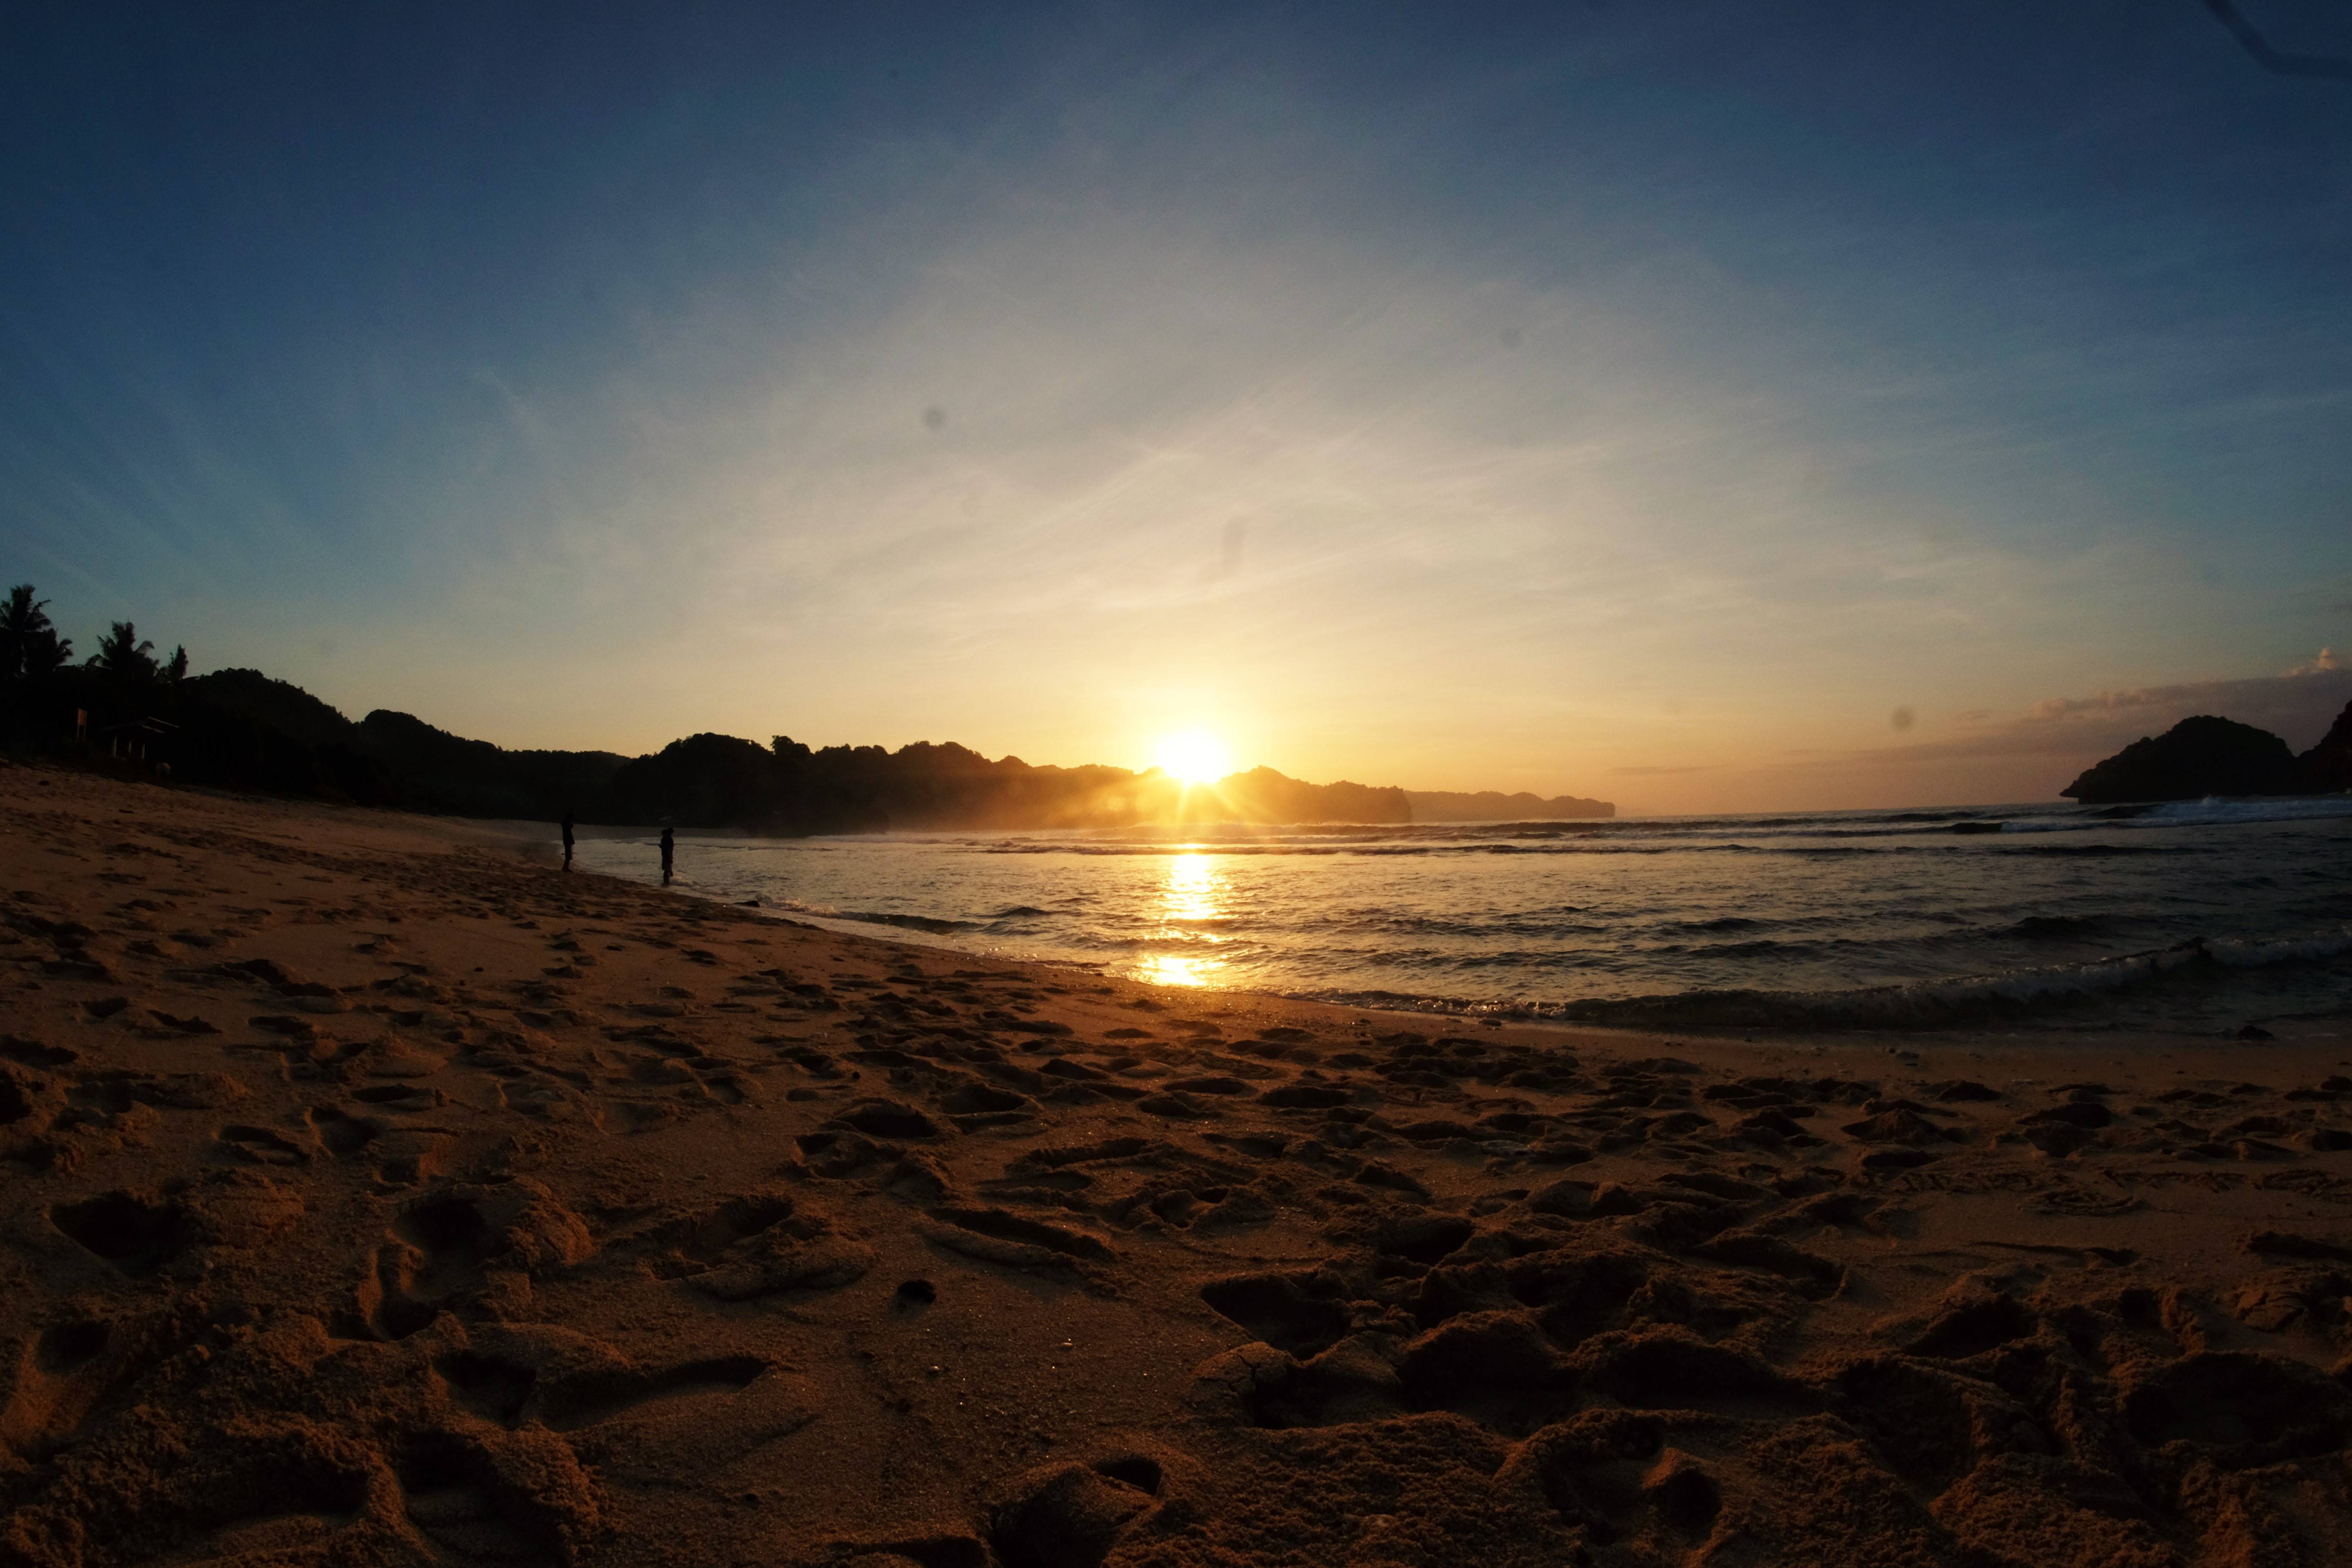  Pantai  Srau Pesona Sunrise dan Sunset  di  Satu Tempat